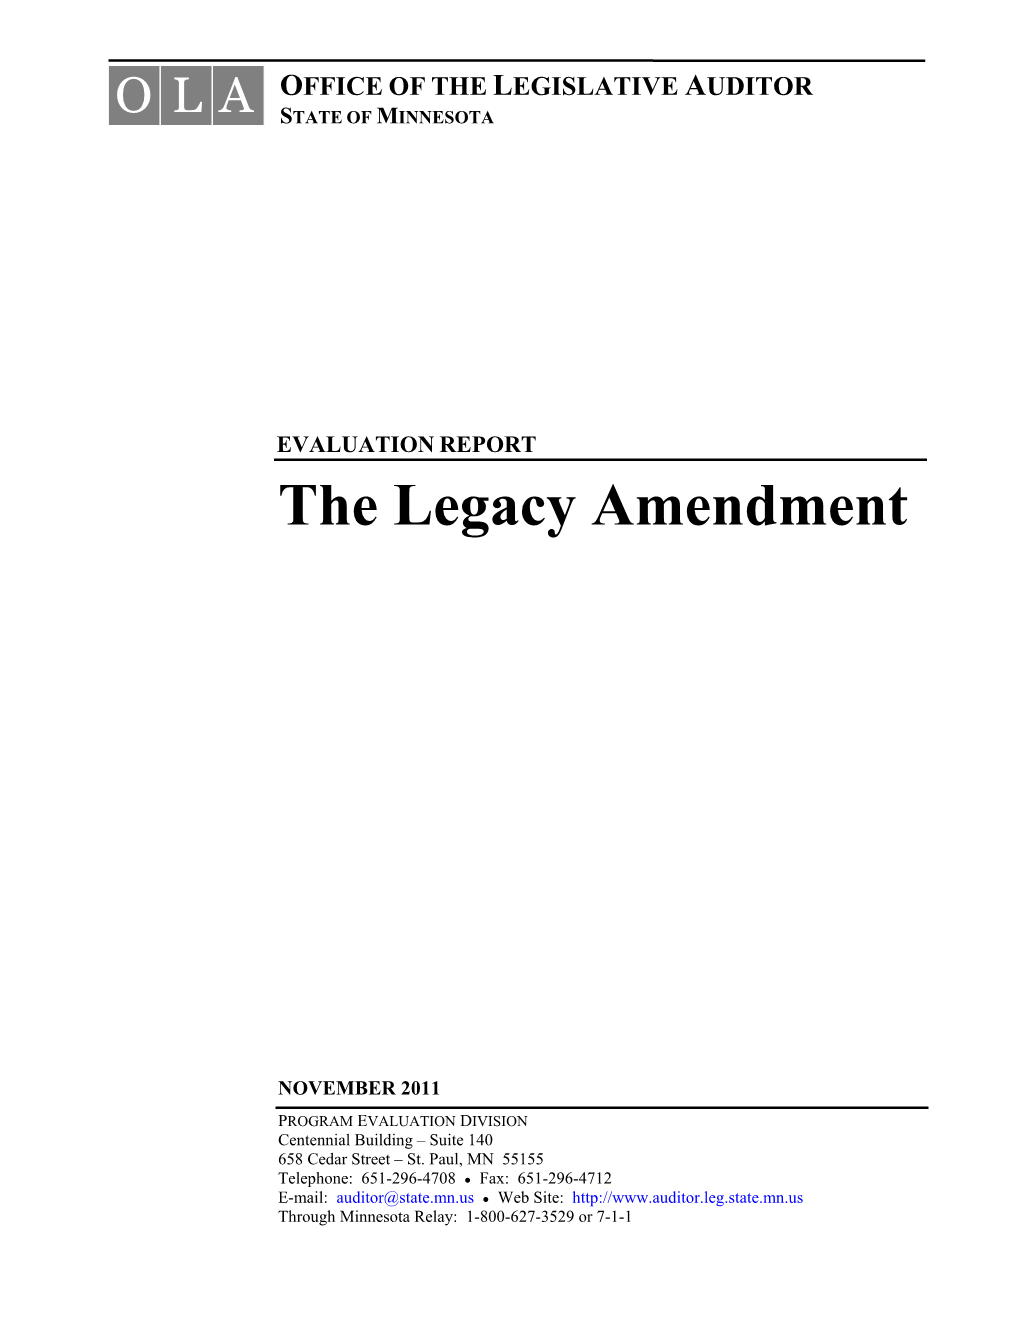 The Legacy Amendment